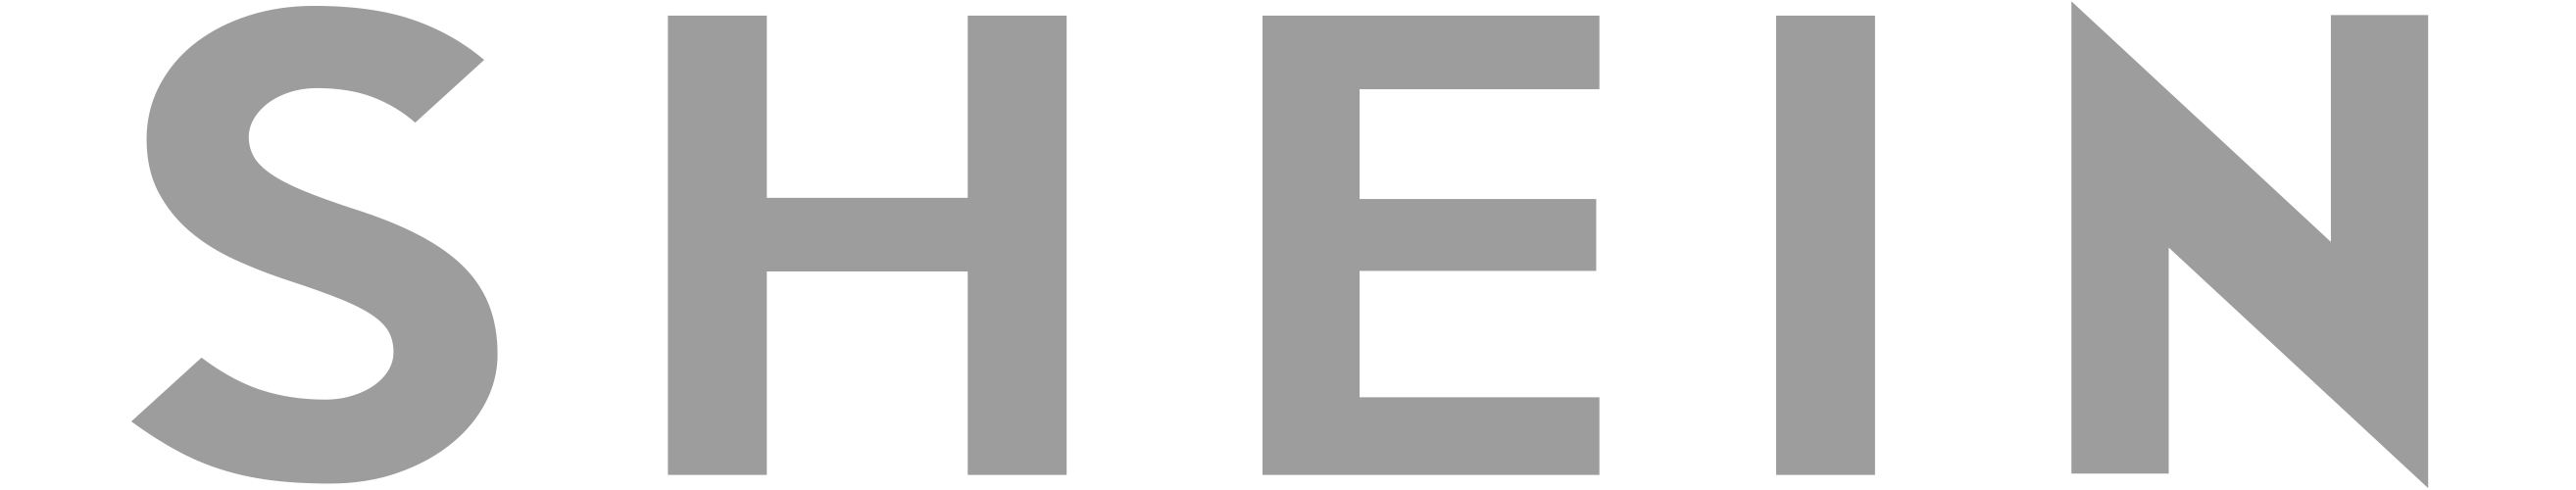 Shein logo 